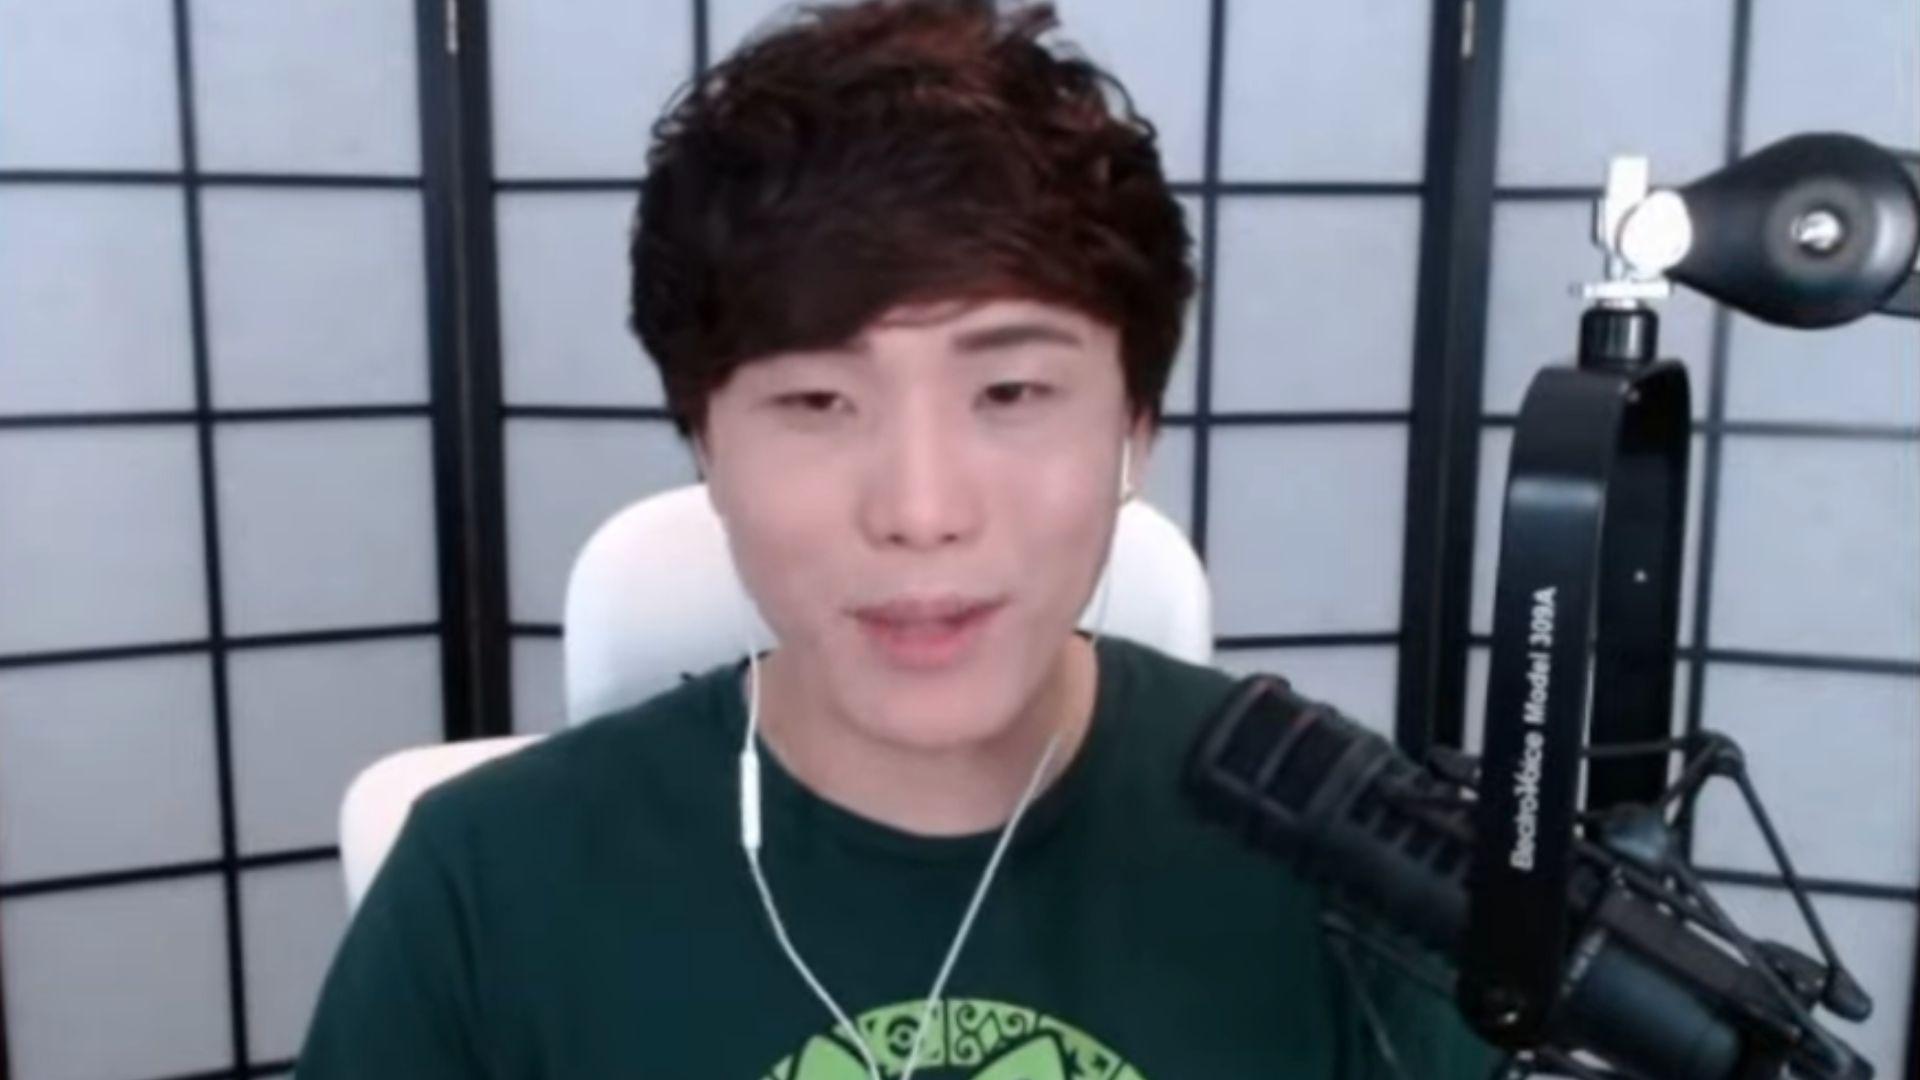 Sykkuno in green shirt talking to microphone